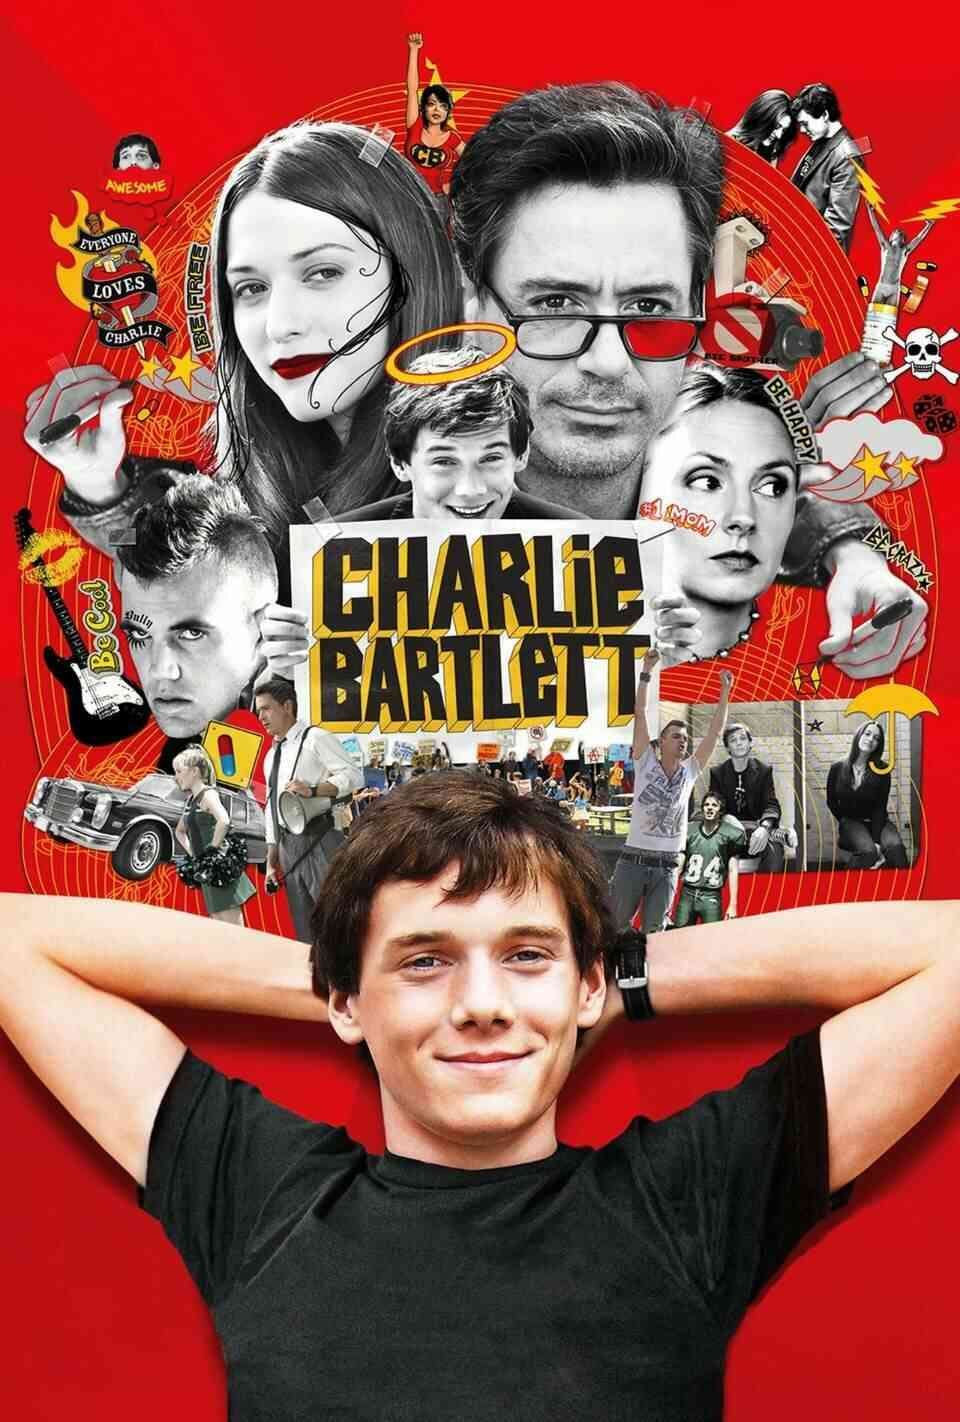 Read Charlie Bartlett screenplay.